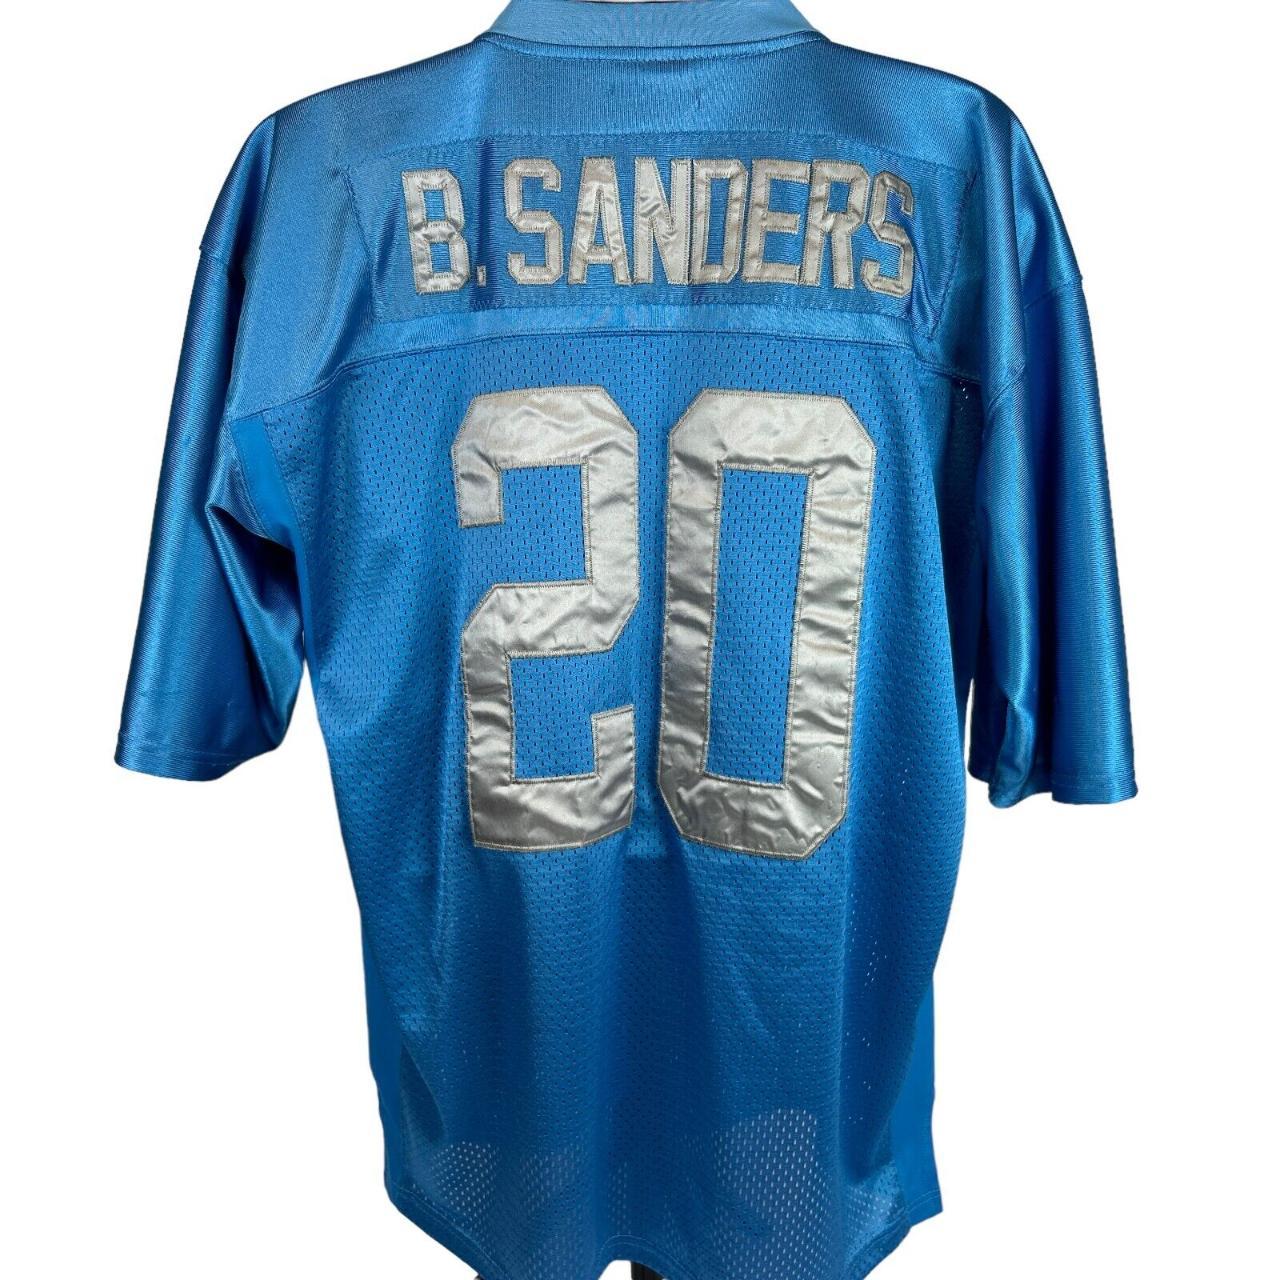 barry sanders 75th anniversary jersey